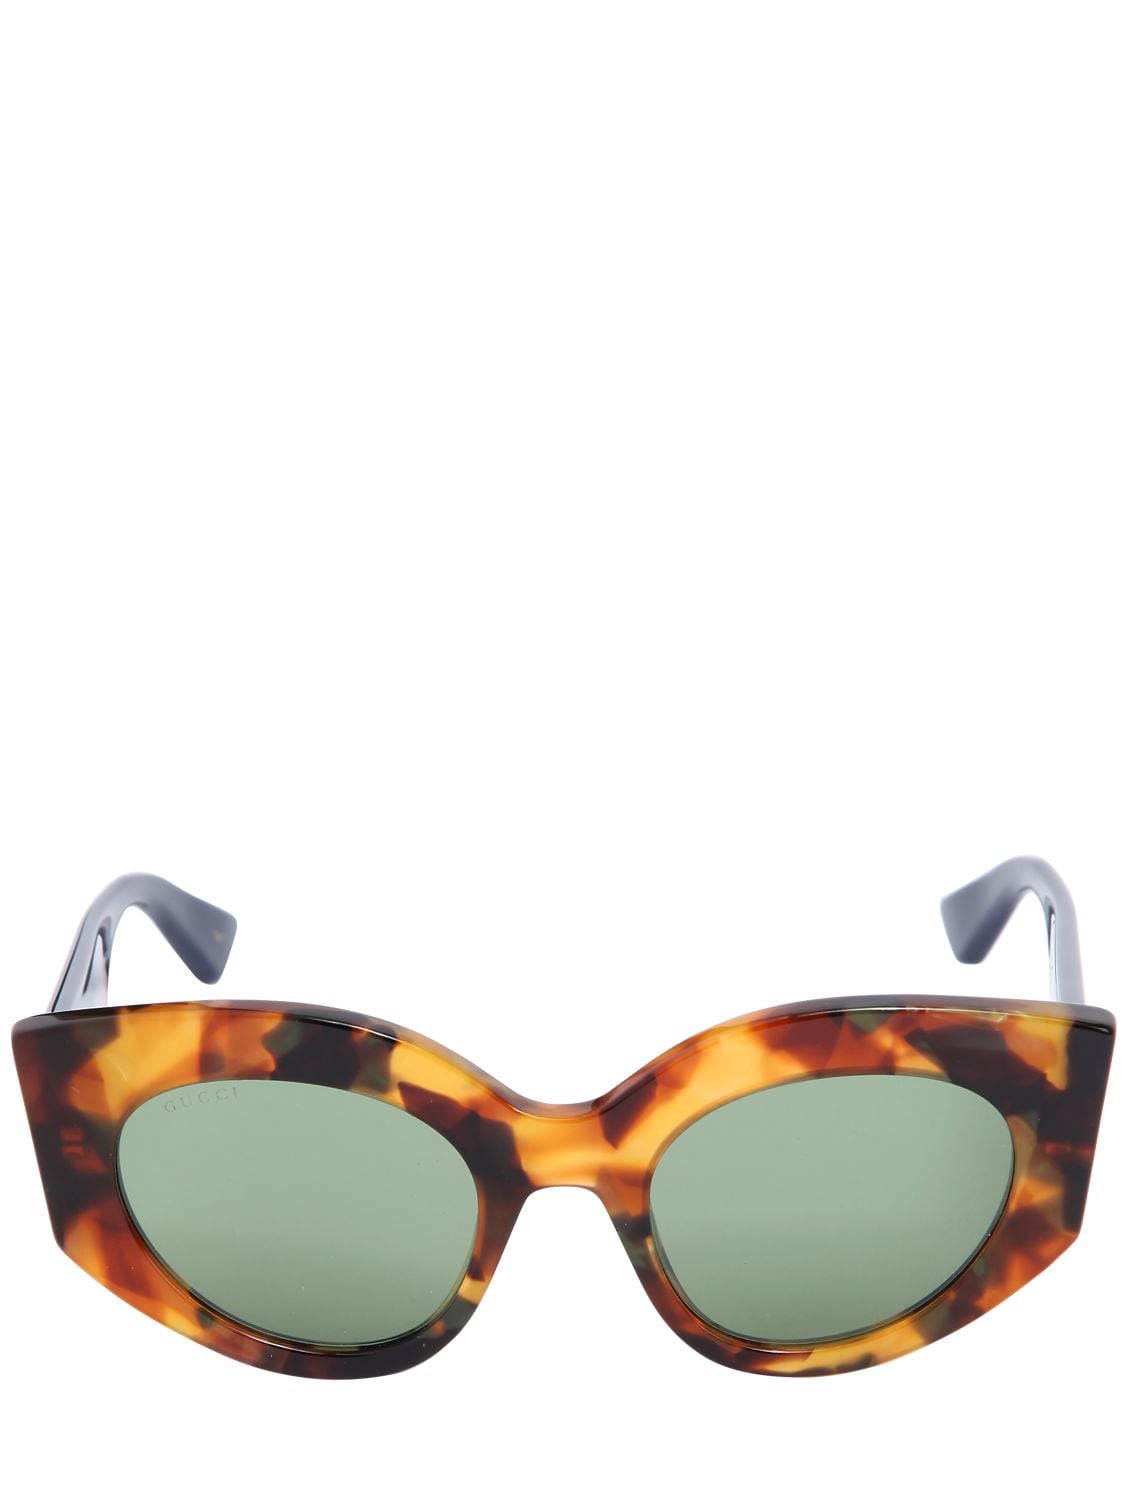 Gucci Tortoiseshell Cat-eye Web Sunglasses In Brown | ModeSens